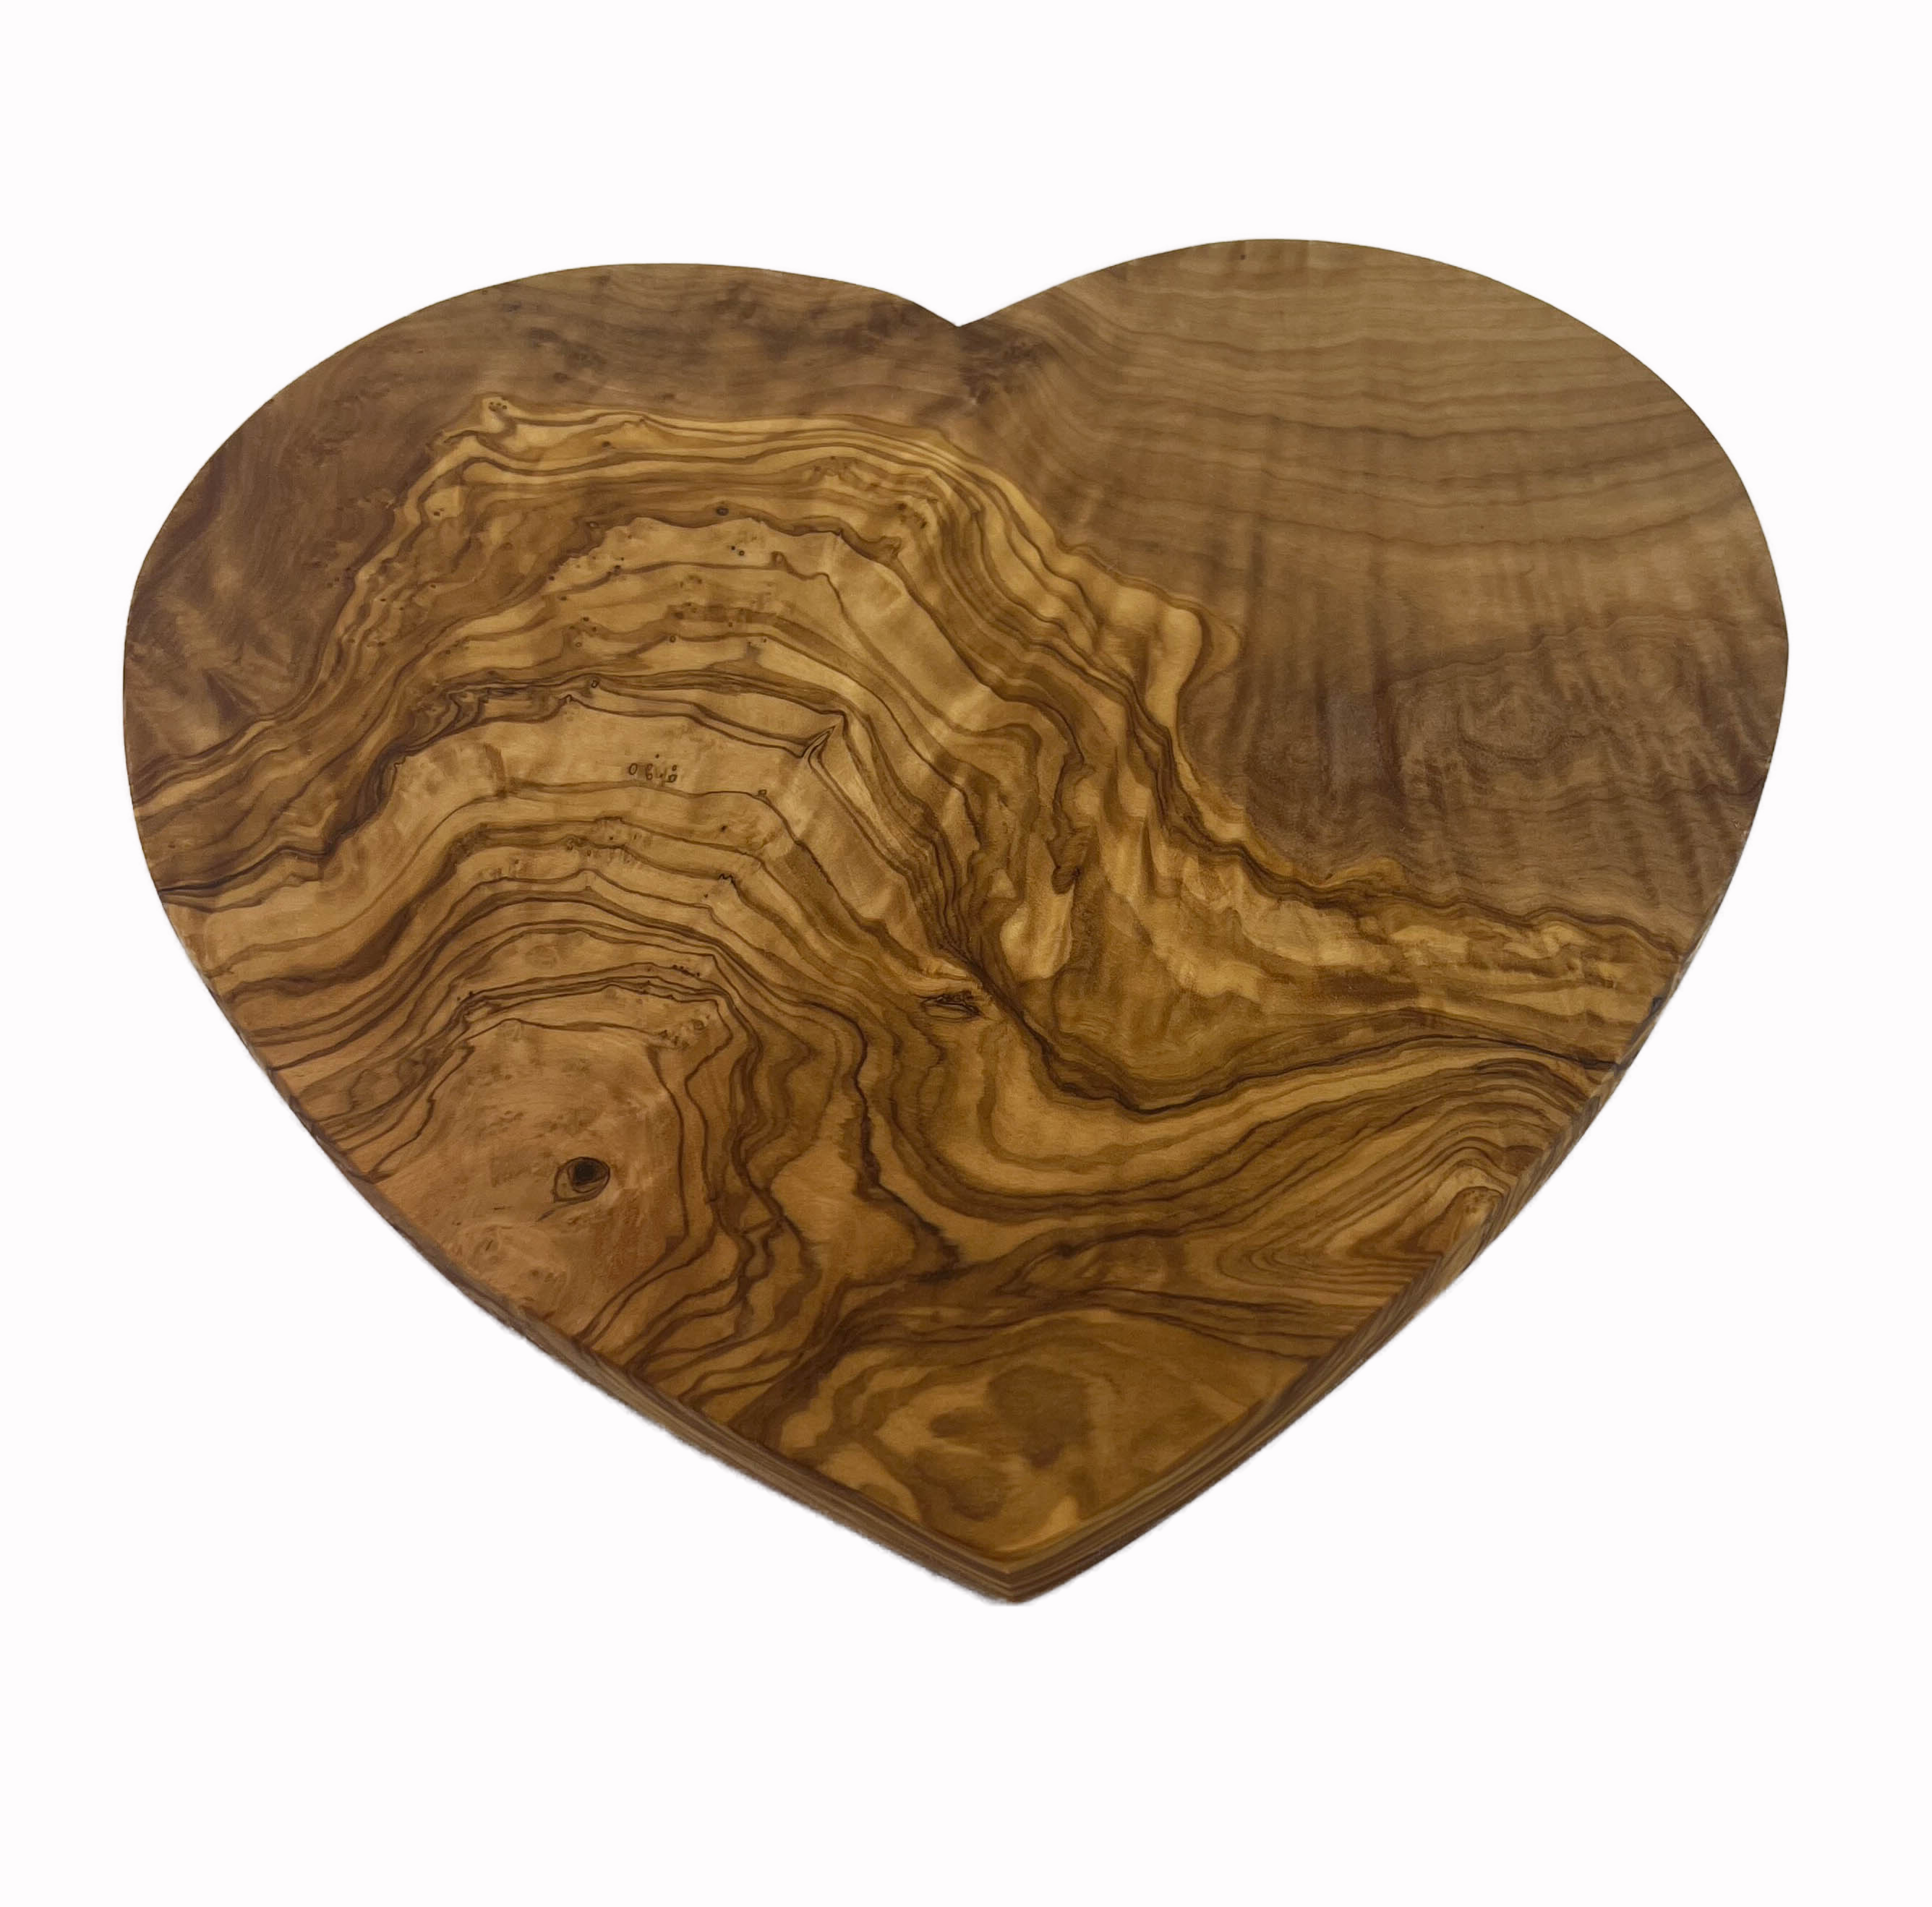 Olive wood cutting board in heart shape, 24x22 cm.